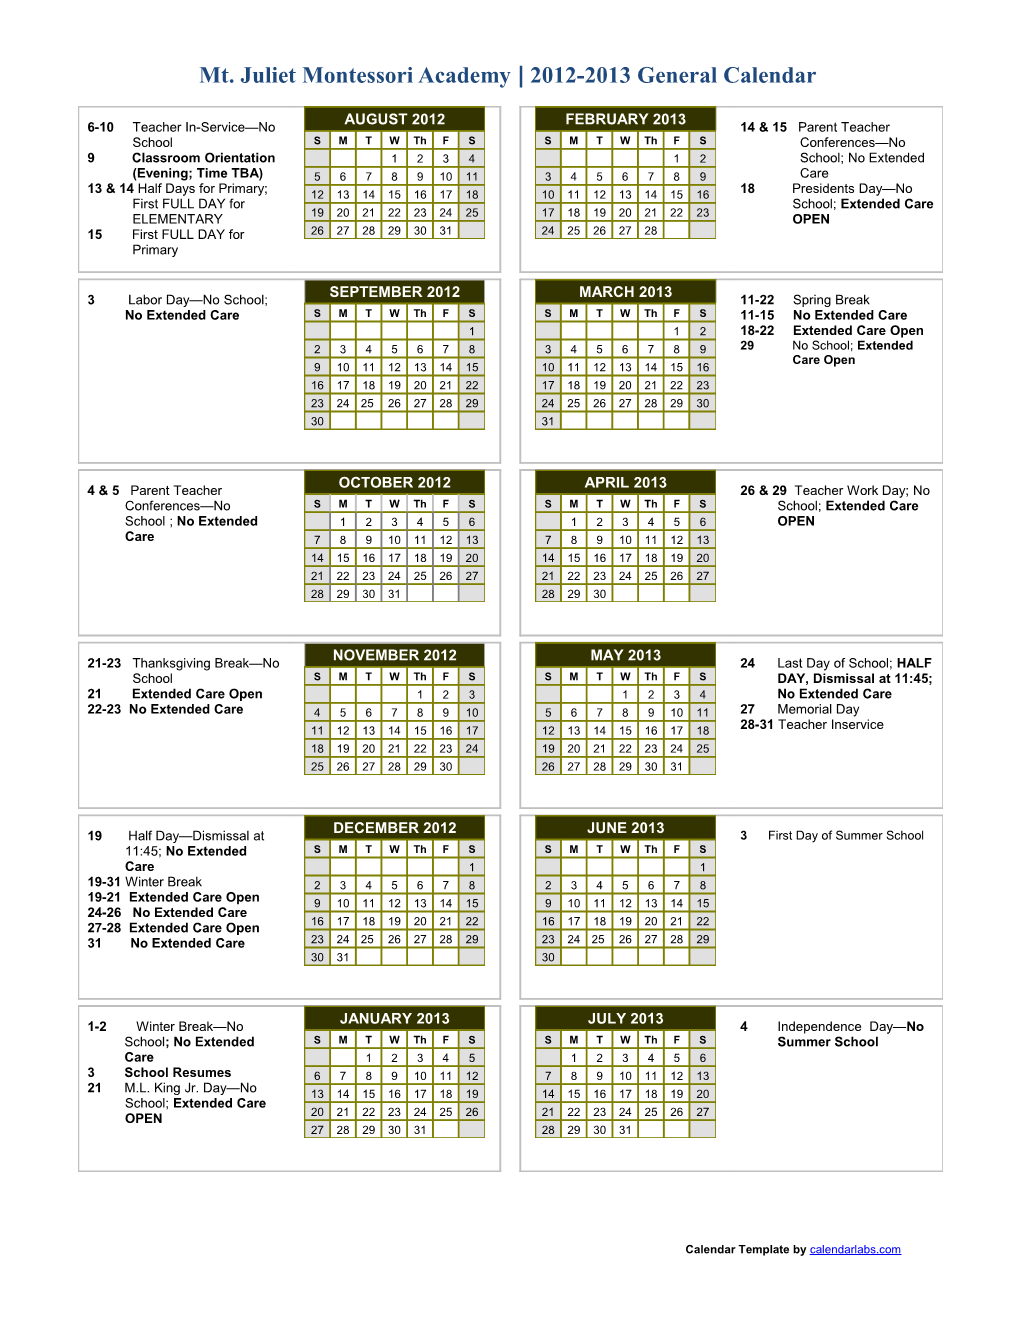 Mt. Juliet Montessori Academy 2012-2013 General Calendar